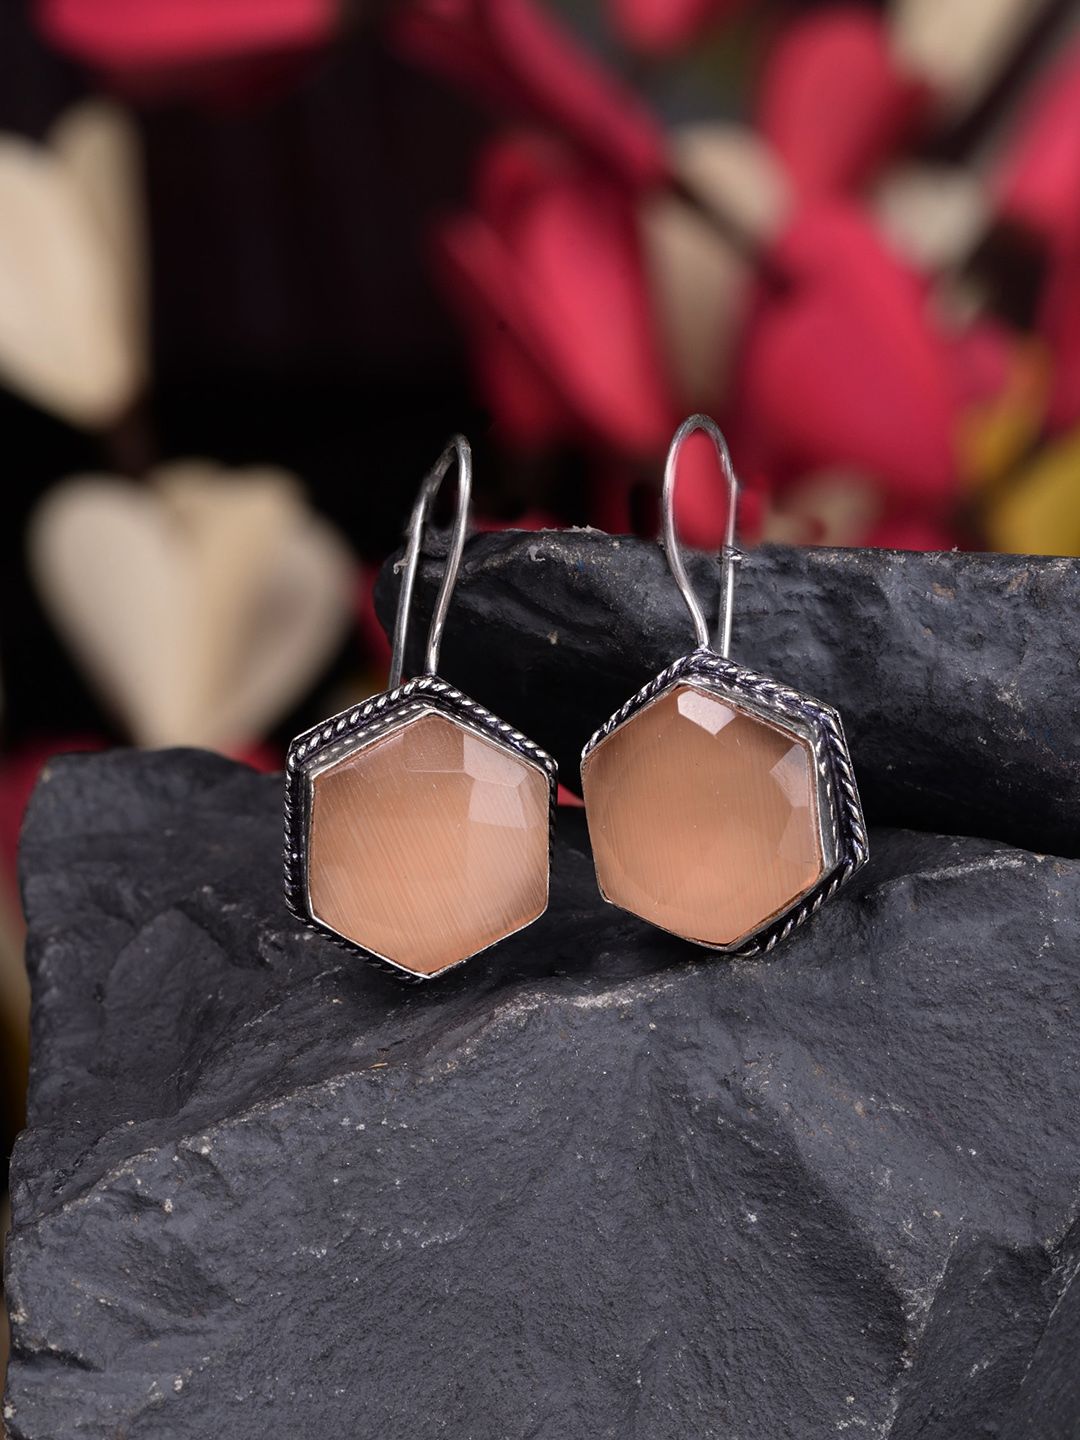 Saraf RS Jewellery Peach-Coloured Geometric Drop Earrings Price in India